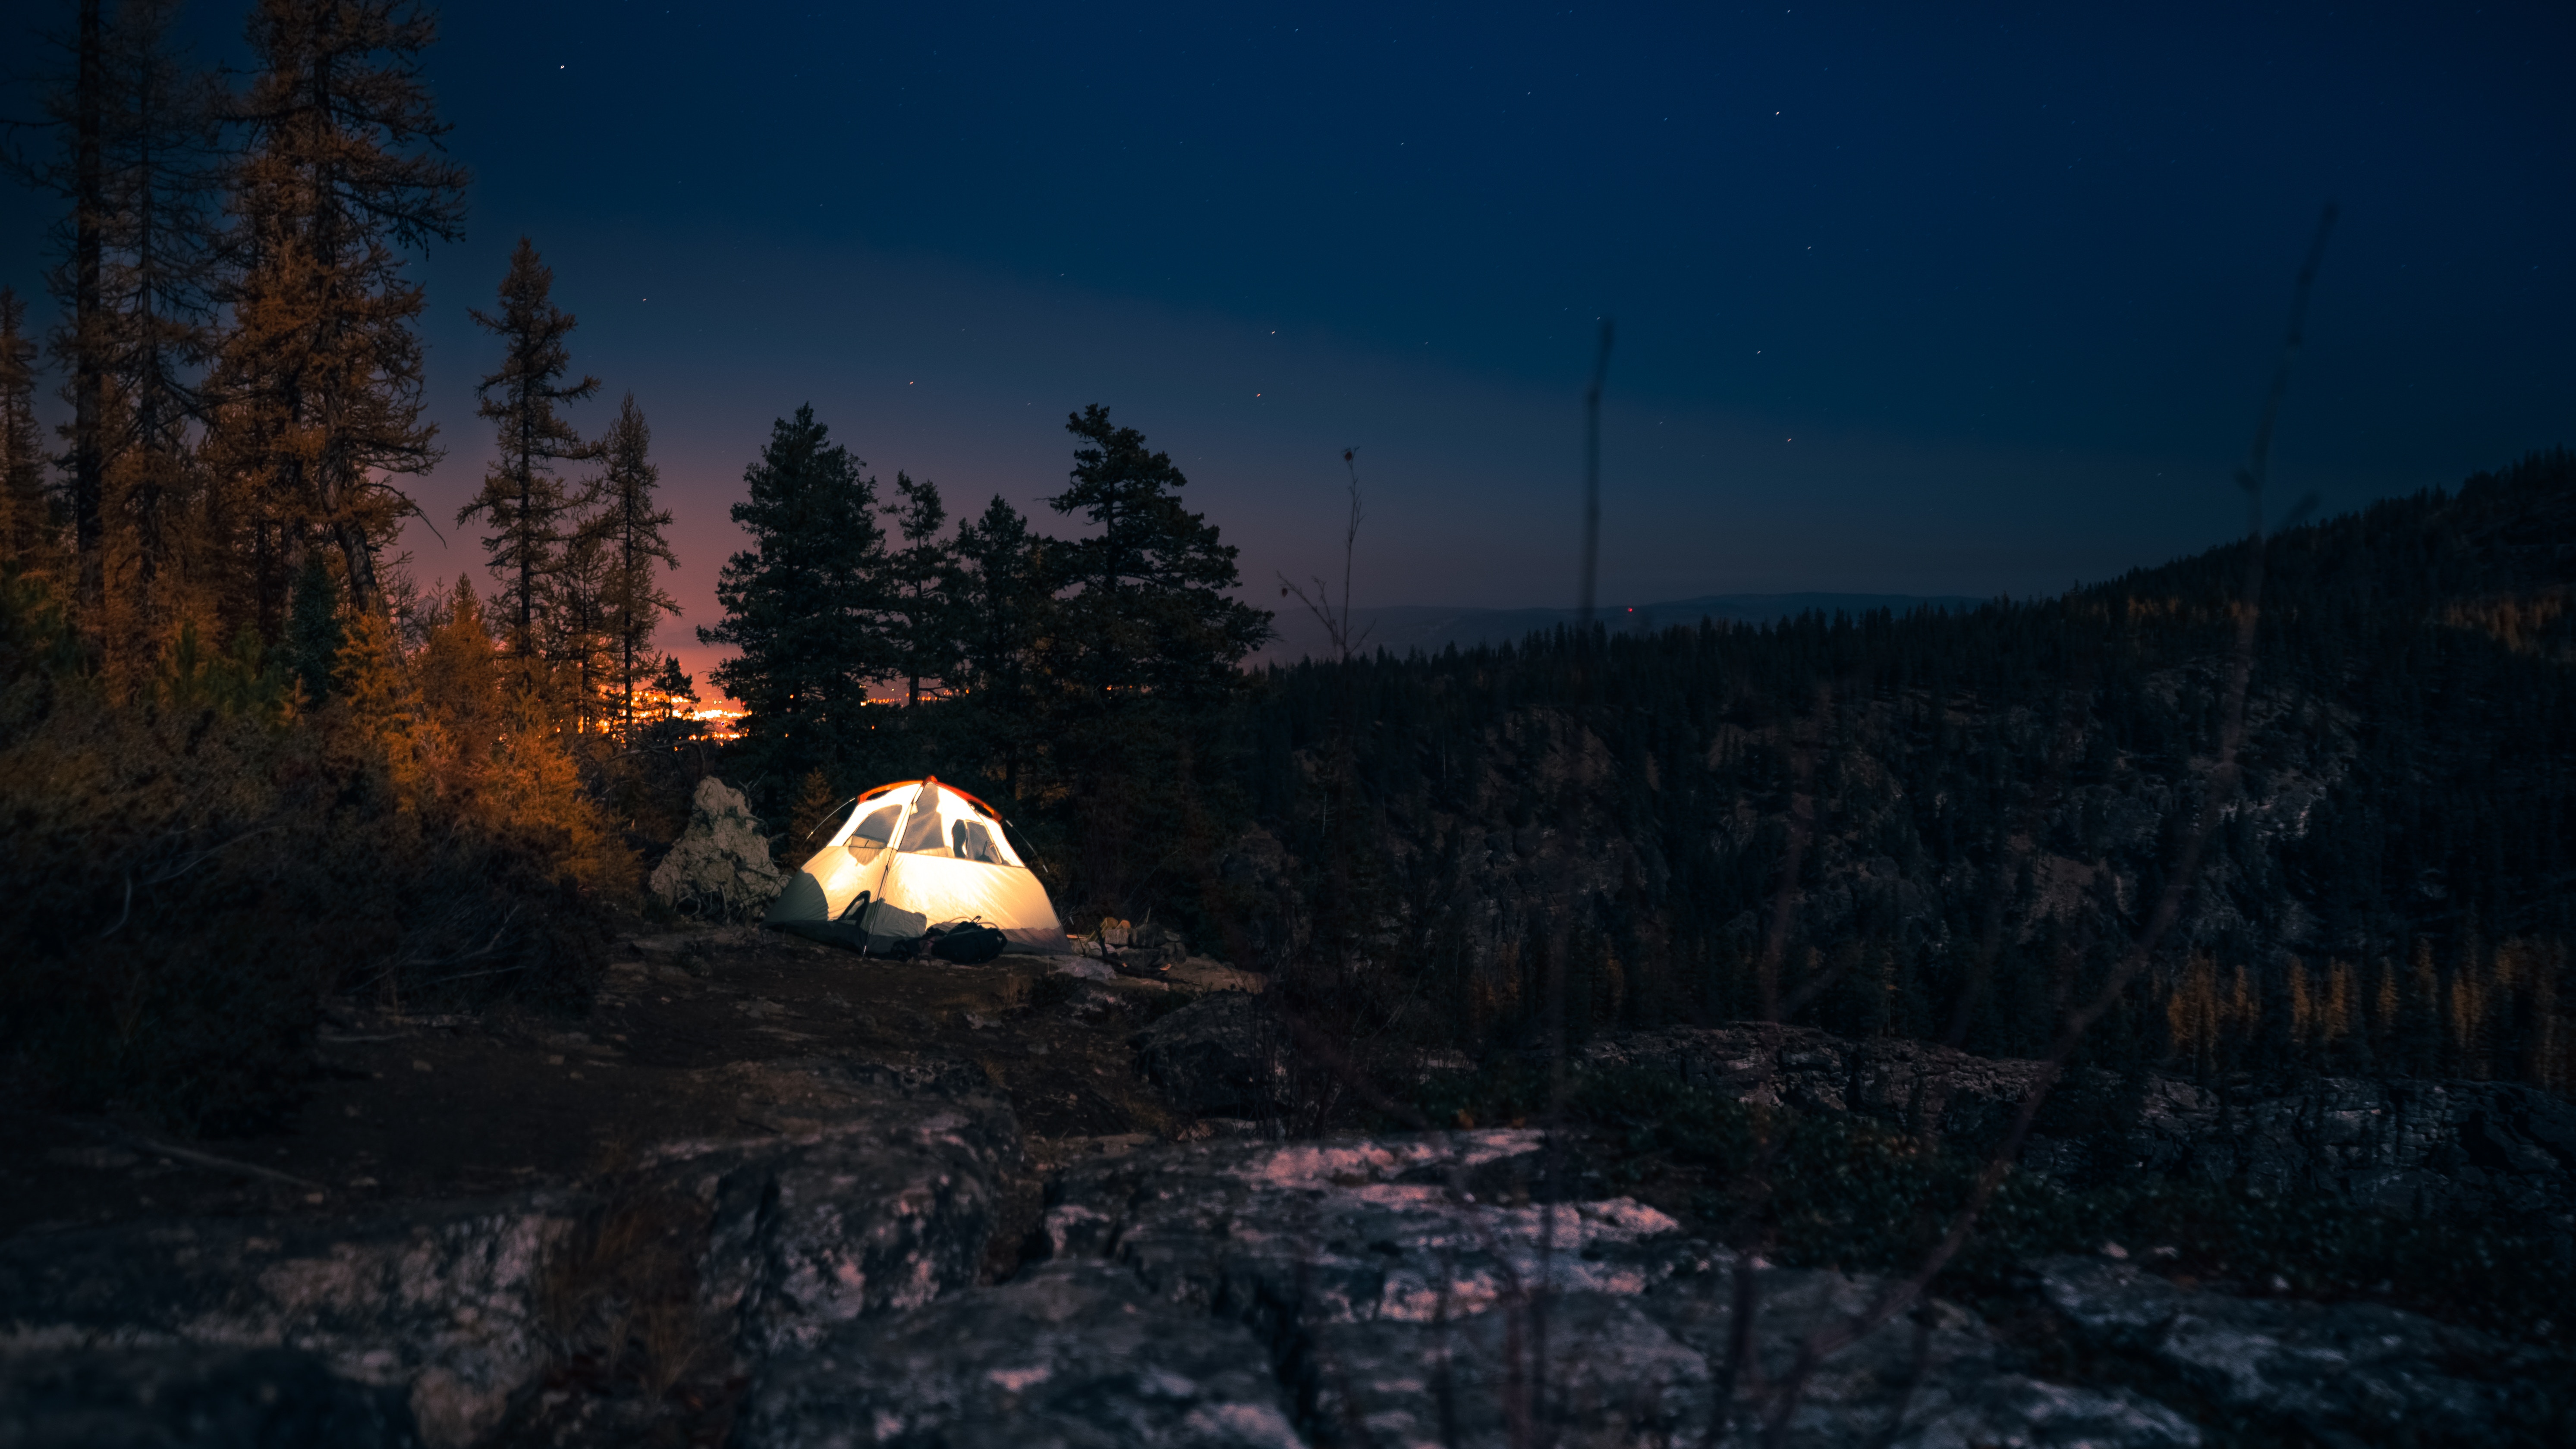 dark, trees, night, starry sky, tent, camping, campsite